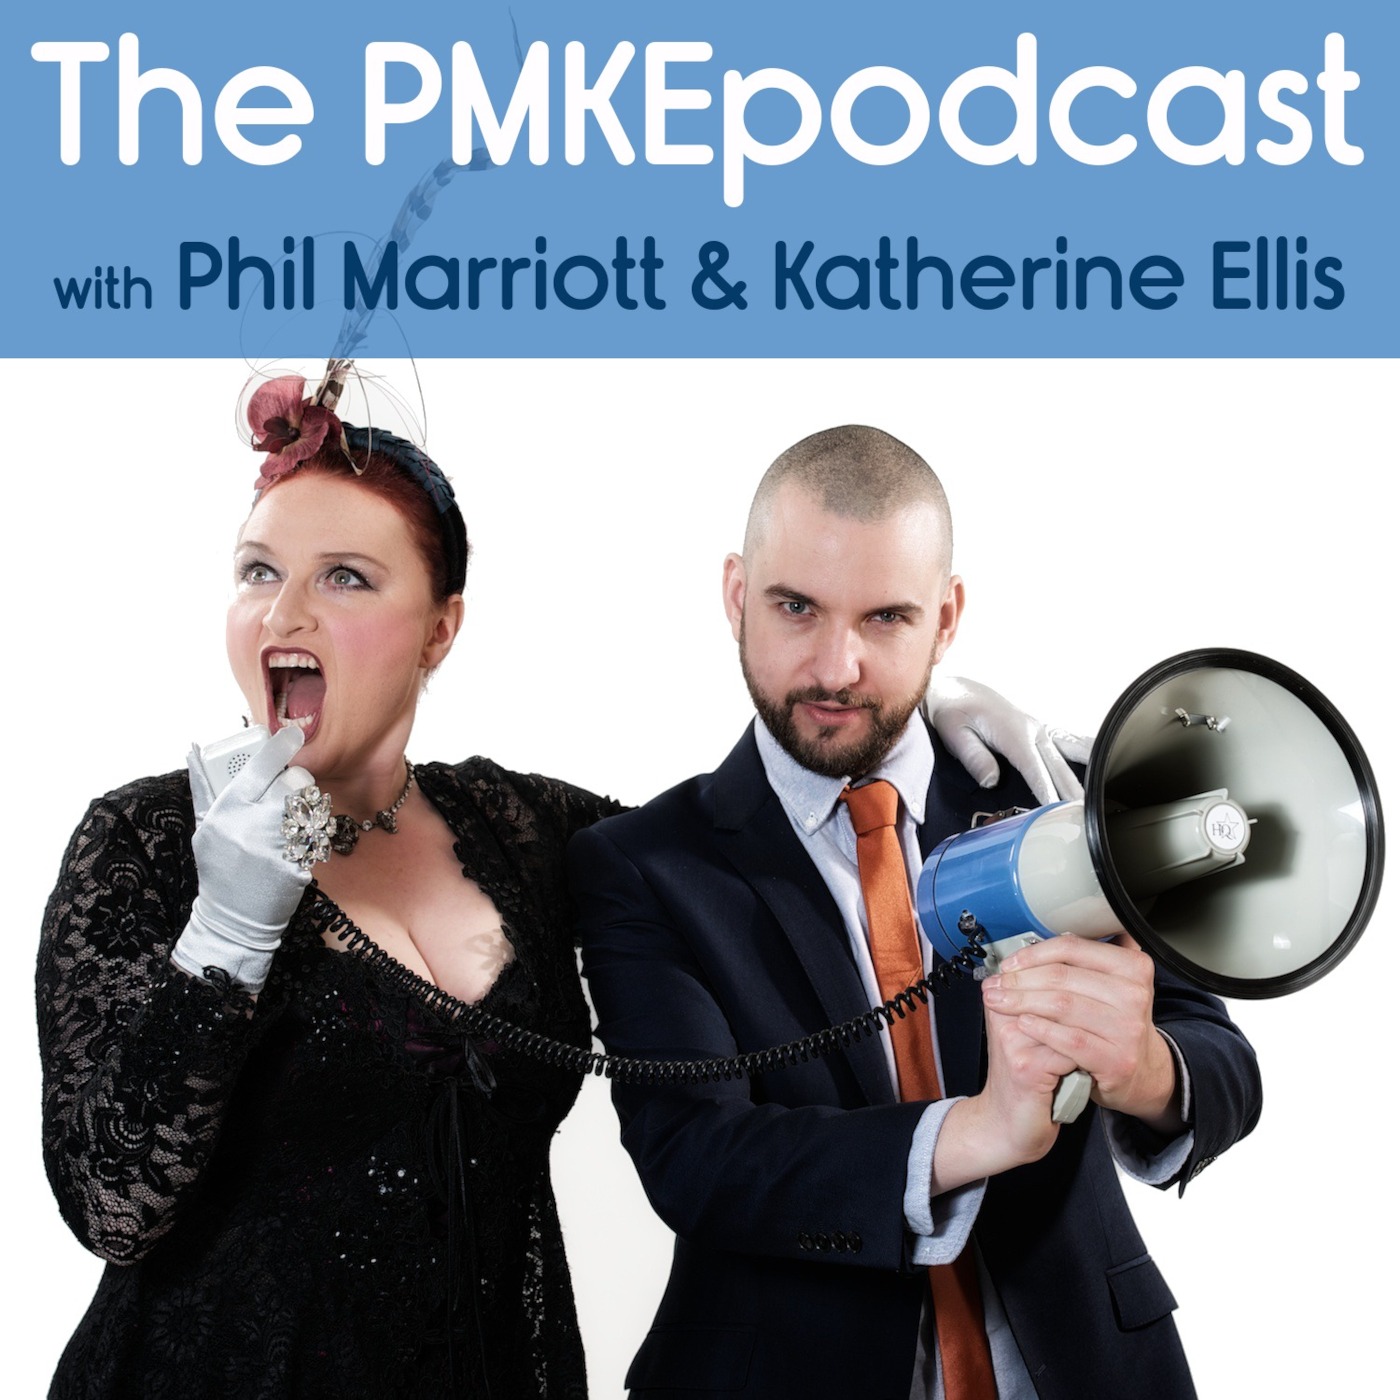 The Phil Marriott & Katherine Ellis Podcast (The PMKEpodcast)